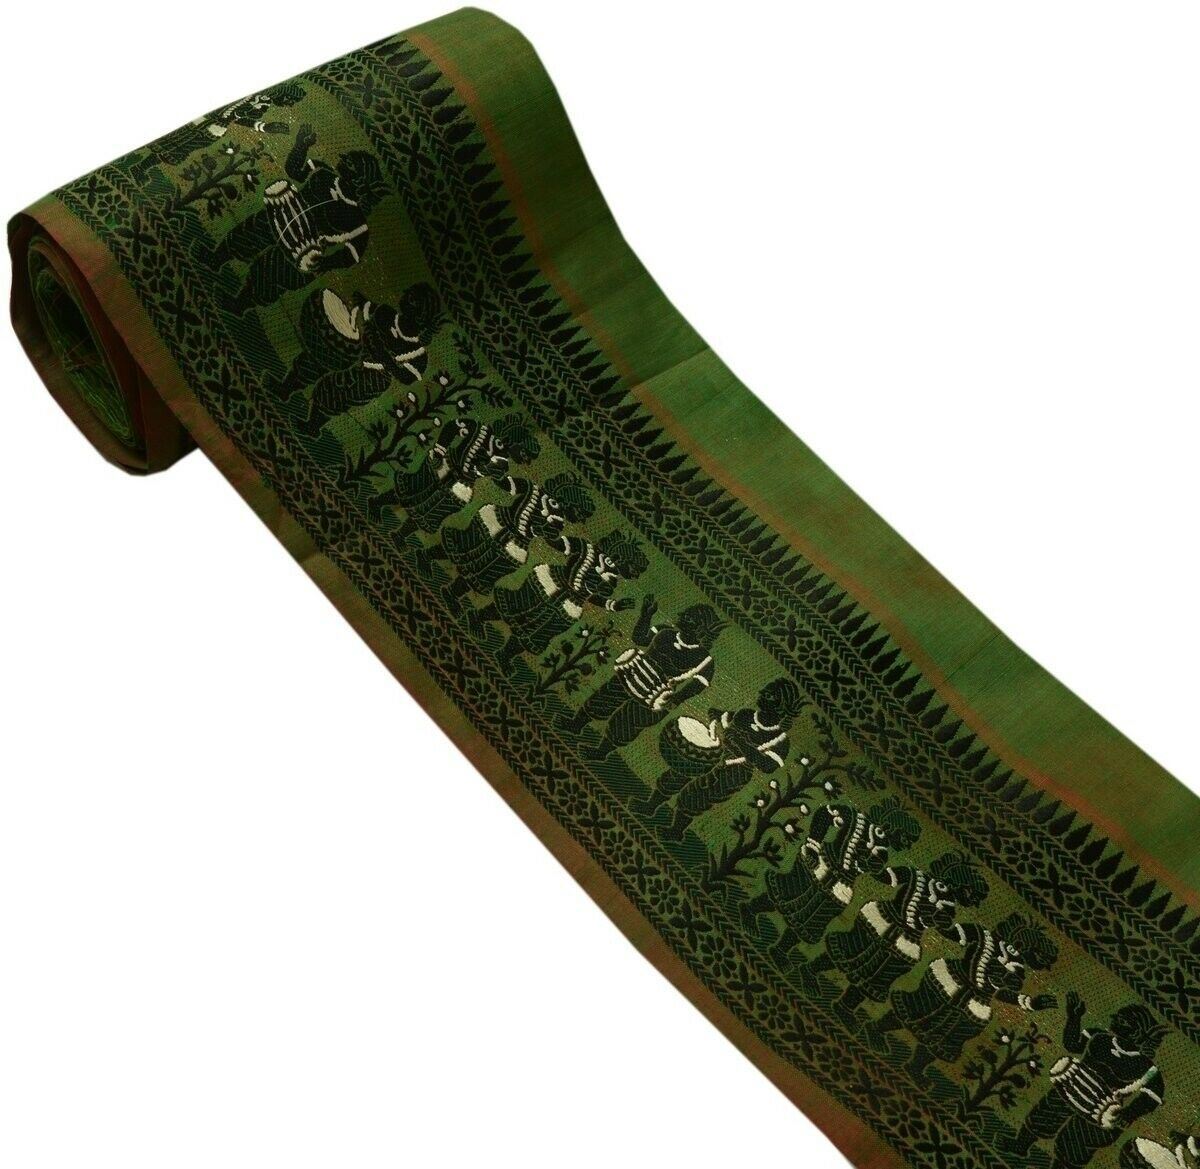 Vintage Sari Border Indian Craft Trim Woven Human Figures Ribbon Lace Green